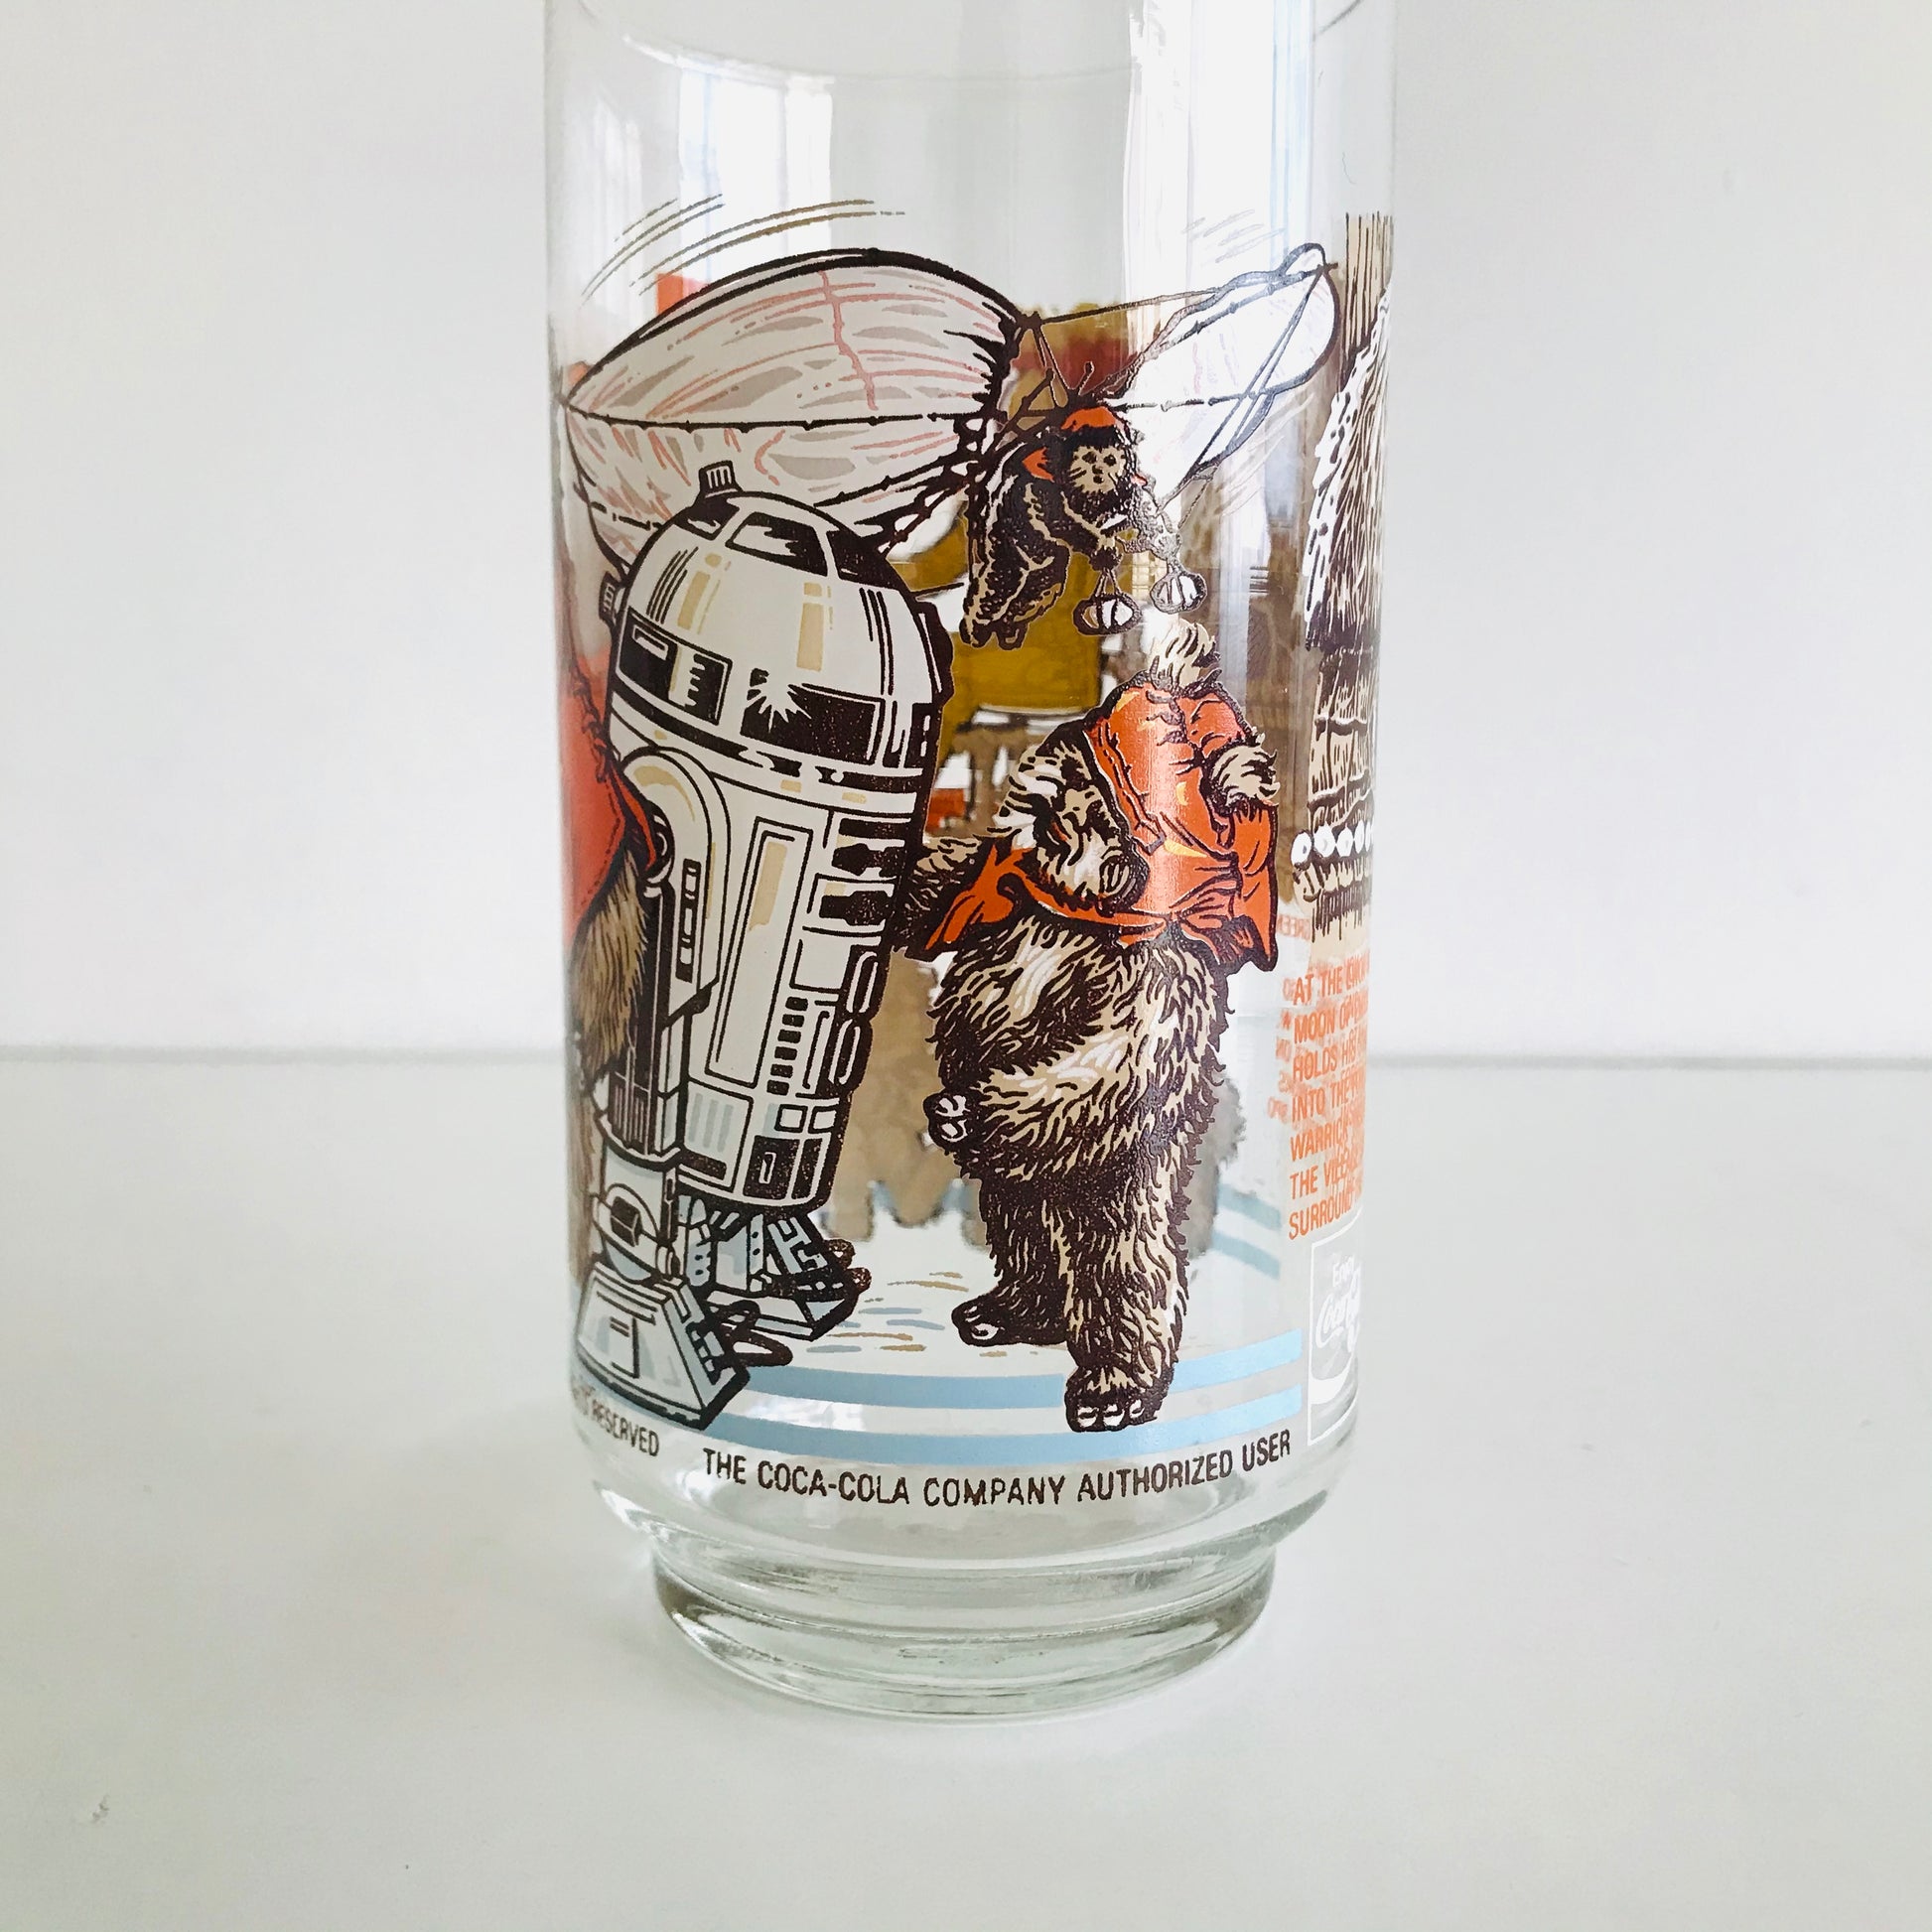 Star Wars Empire Strikes Back Tumblers Drinking Glasses Burger King Promo  1980 